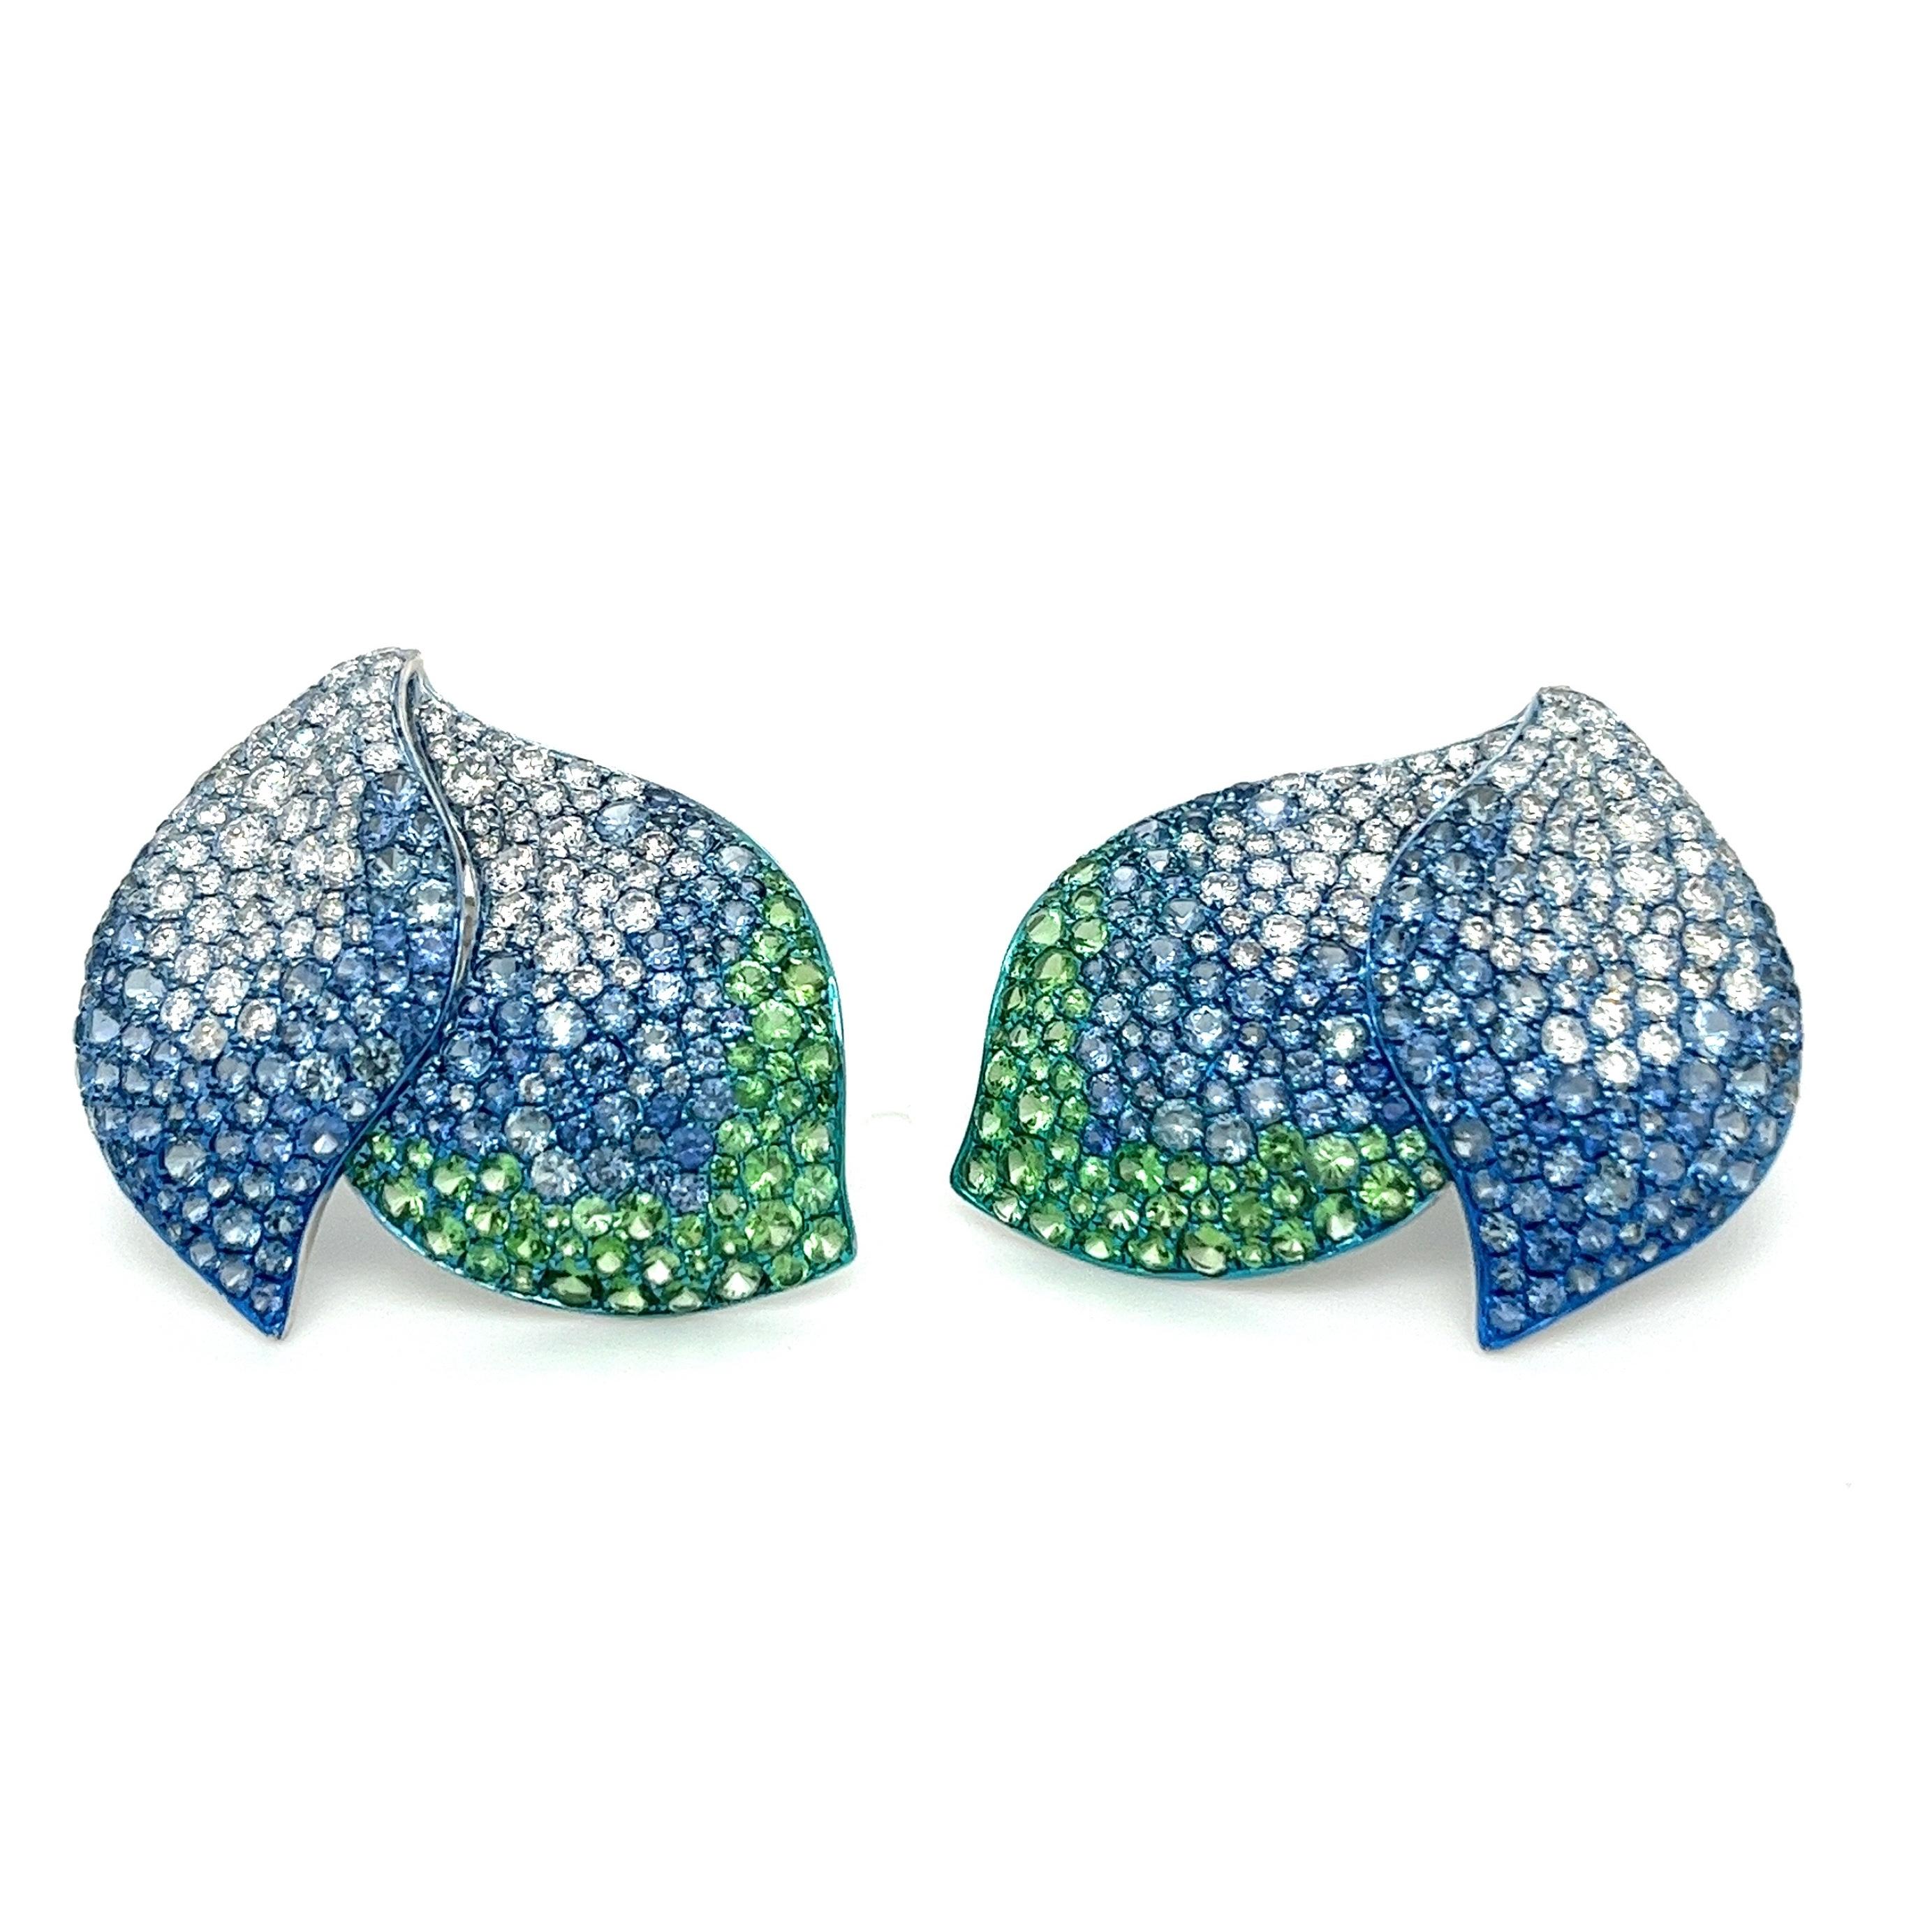 18K White Gold Blue Sapphire & Green Garnet Earrings with Diamonds

190 Diamonds - 2.65 CT
256 Blue Sapphires - 4.41 CT
98 Green Garnets - 1.80 CT
18K White - 7.93 GM

Althoff Jewelry stunning 18K white gold earrings feature a captivating